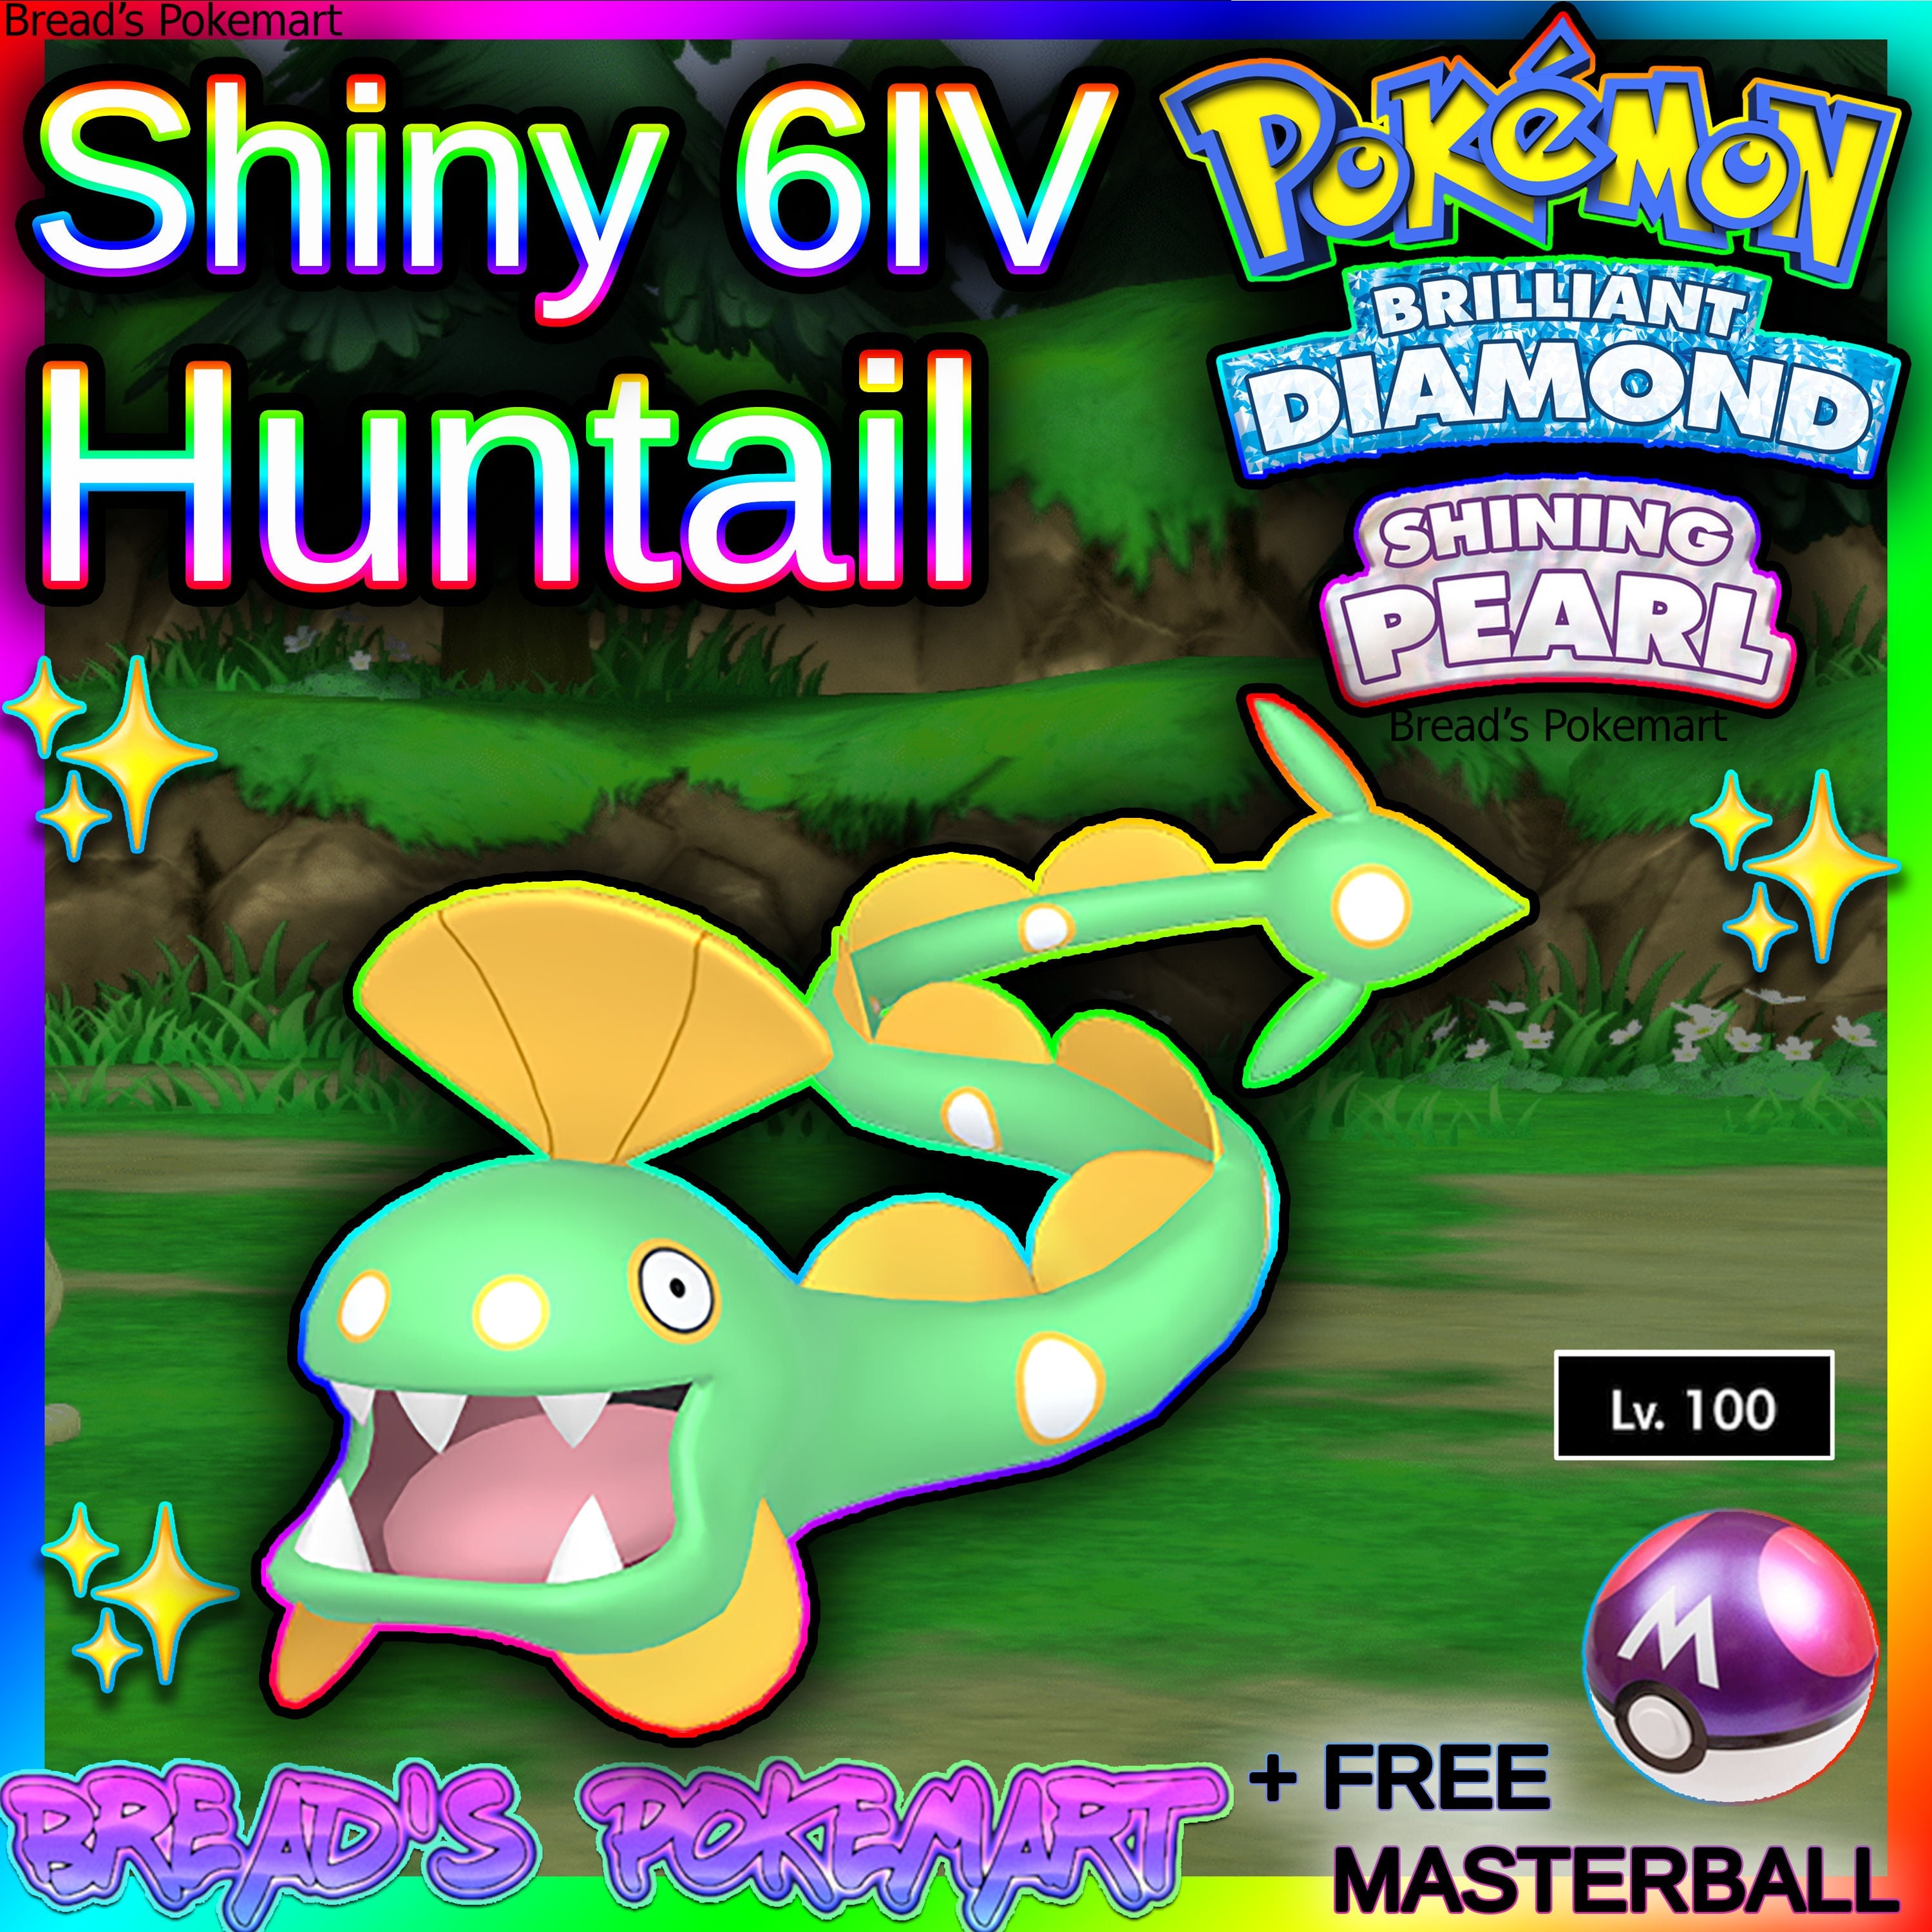 Shiny Alakazam / Pokémon Brilliant Diamond and Shining Pearl / 6IV Pokemon  / Shiny Pokemon